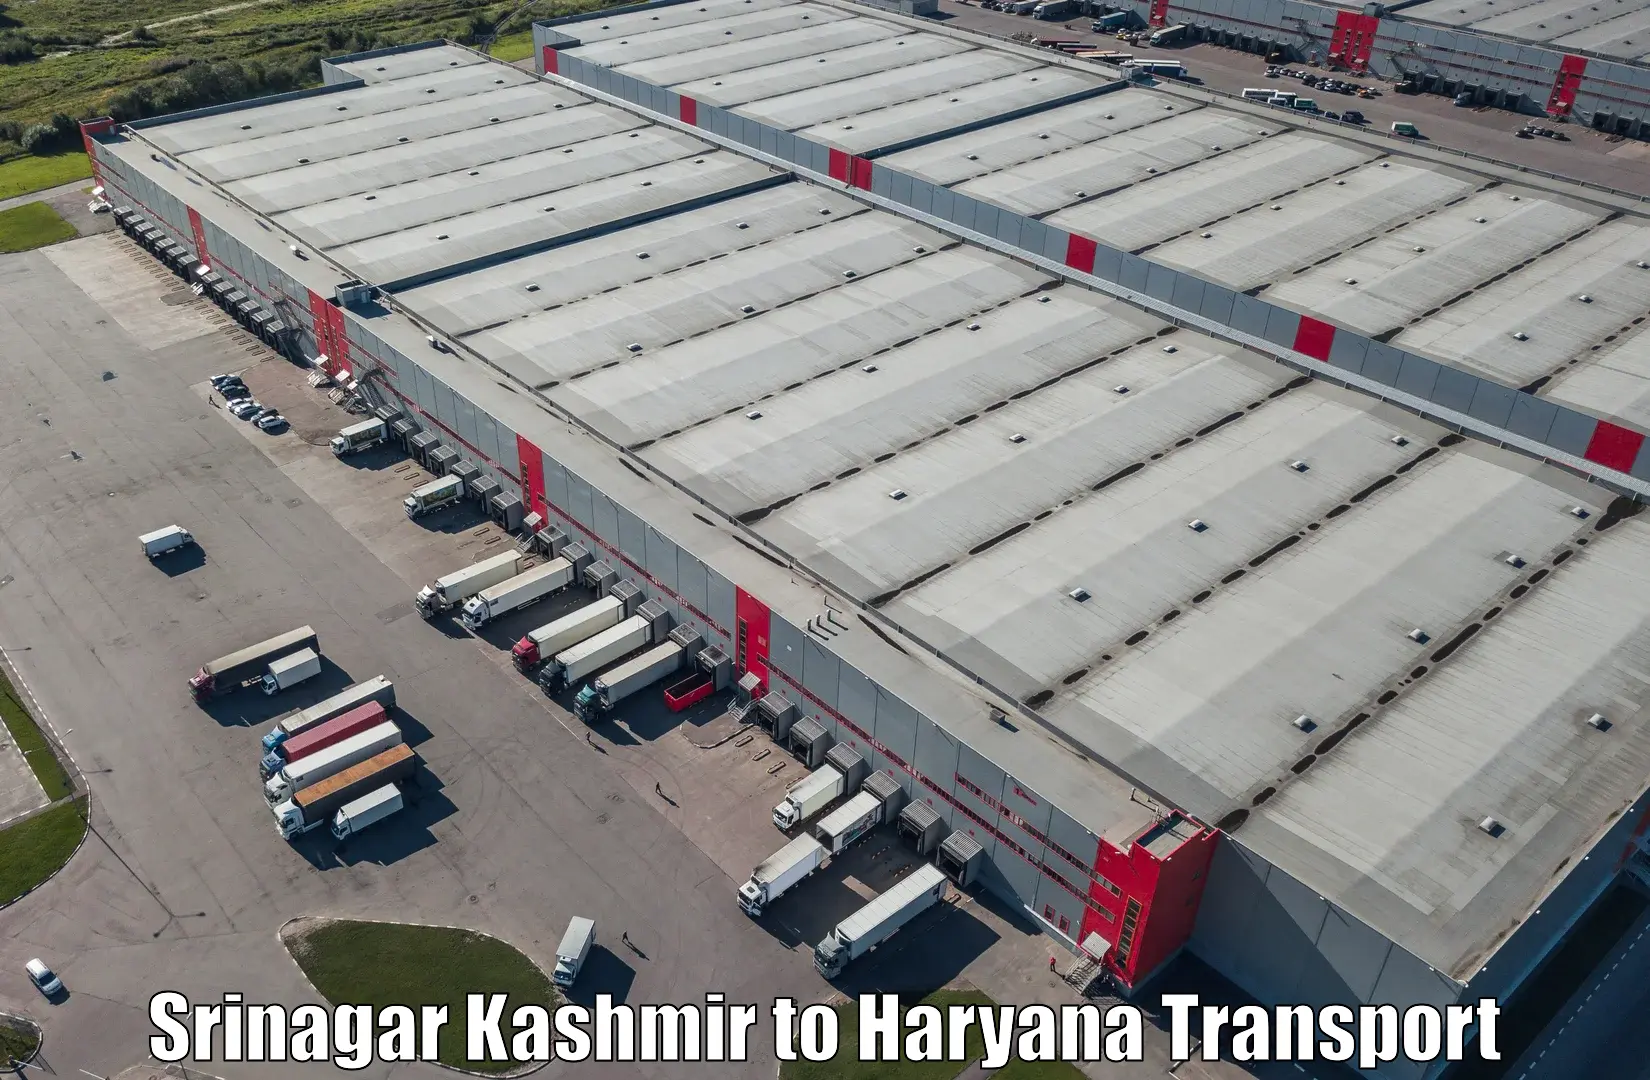 Goods delivery service Srinagar Kashmir to Bilaspur Haryana